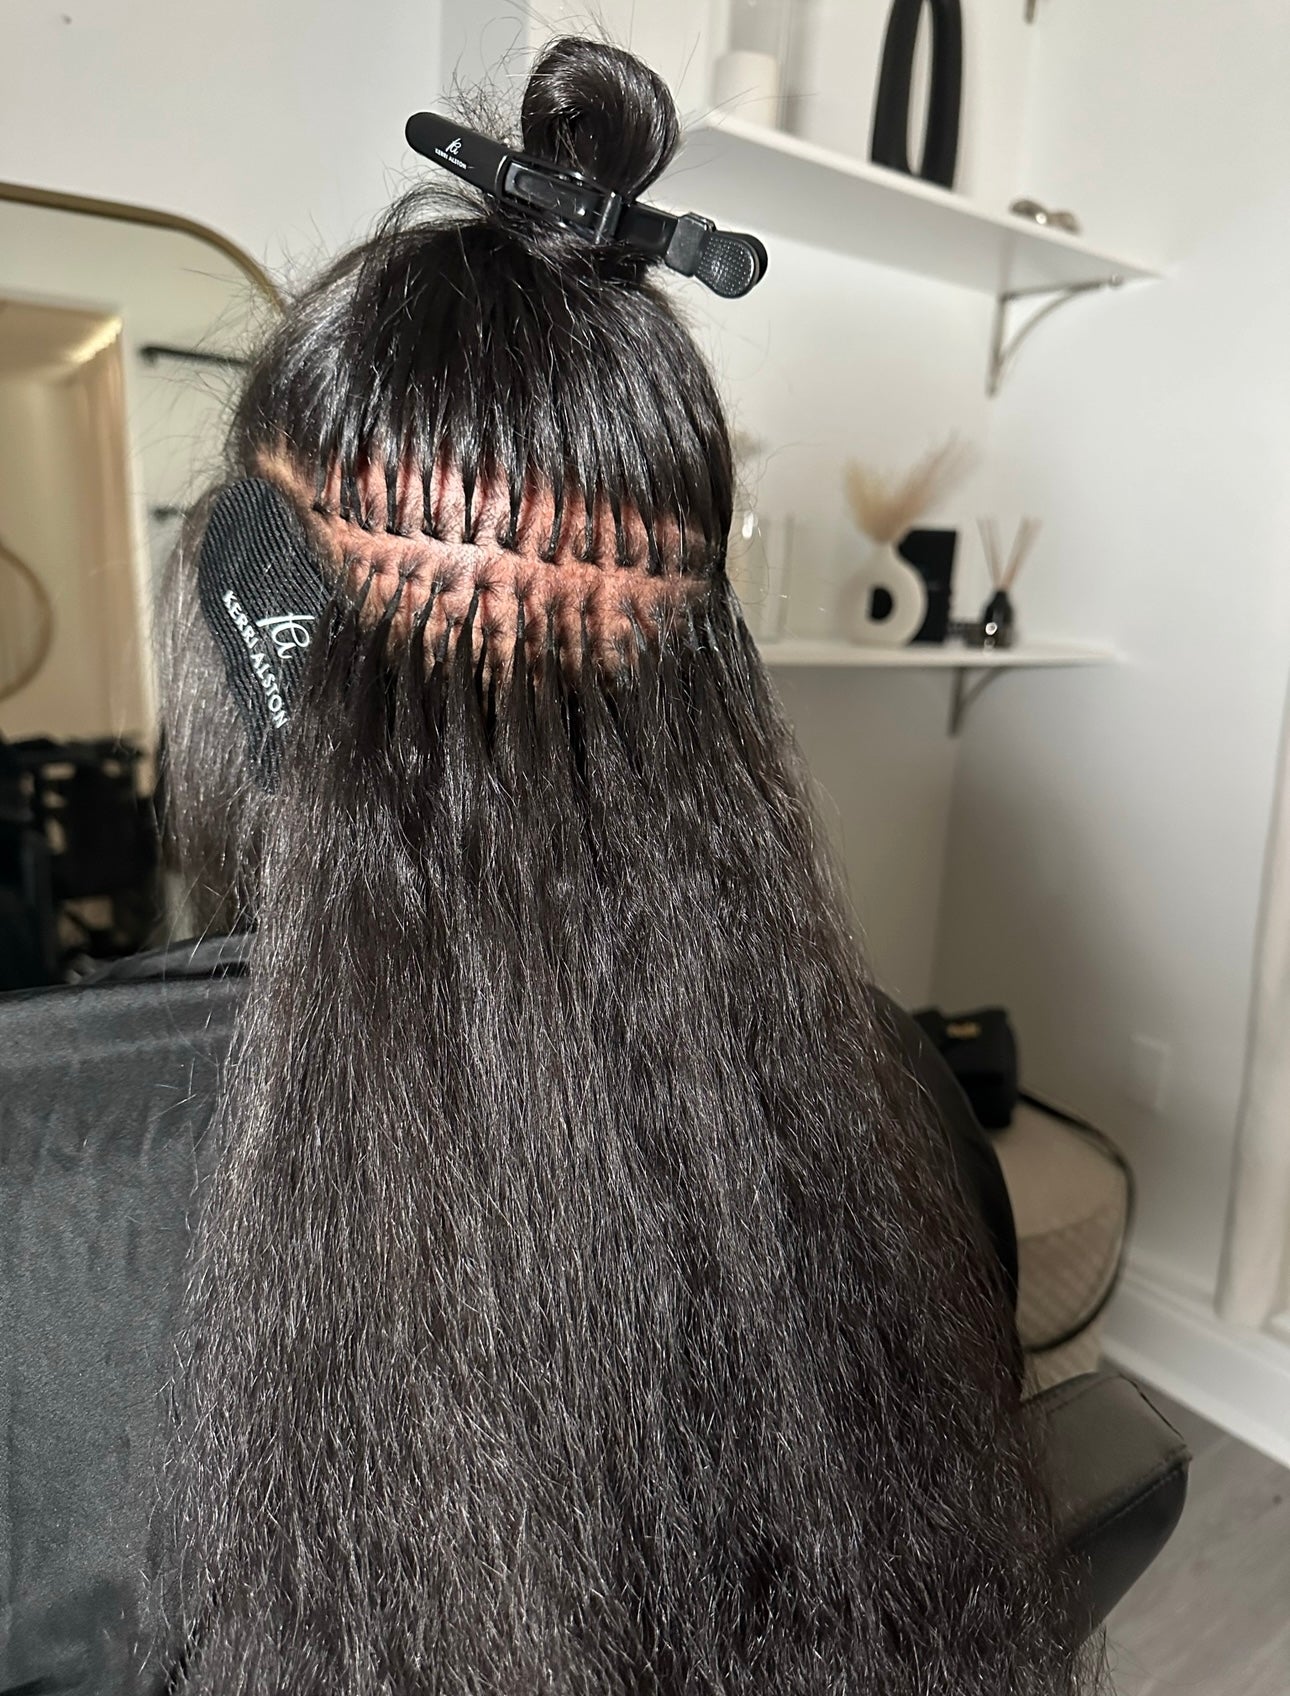 K-Tip Hair Extensions